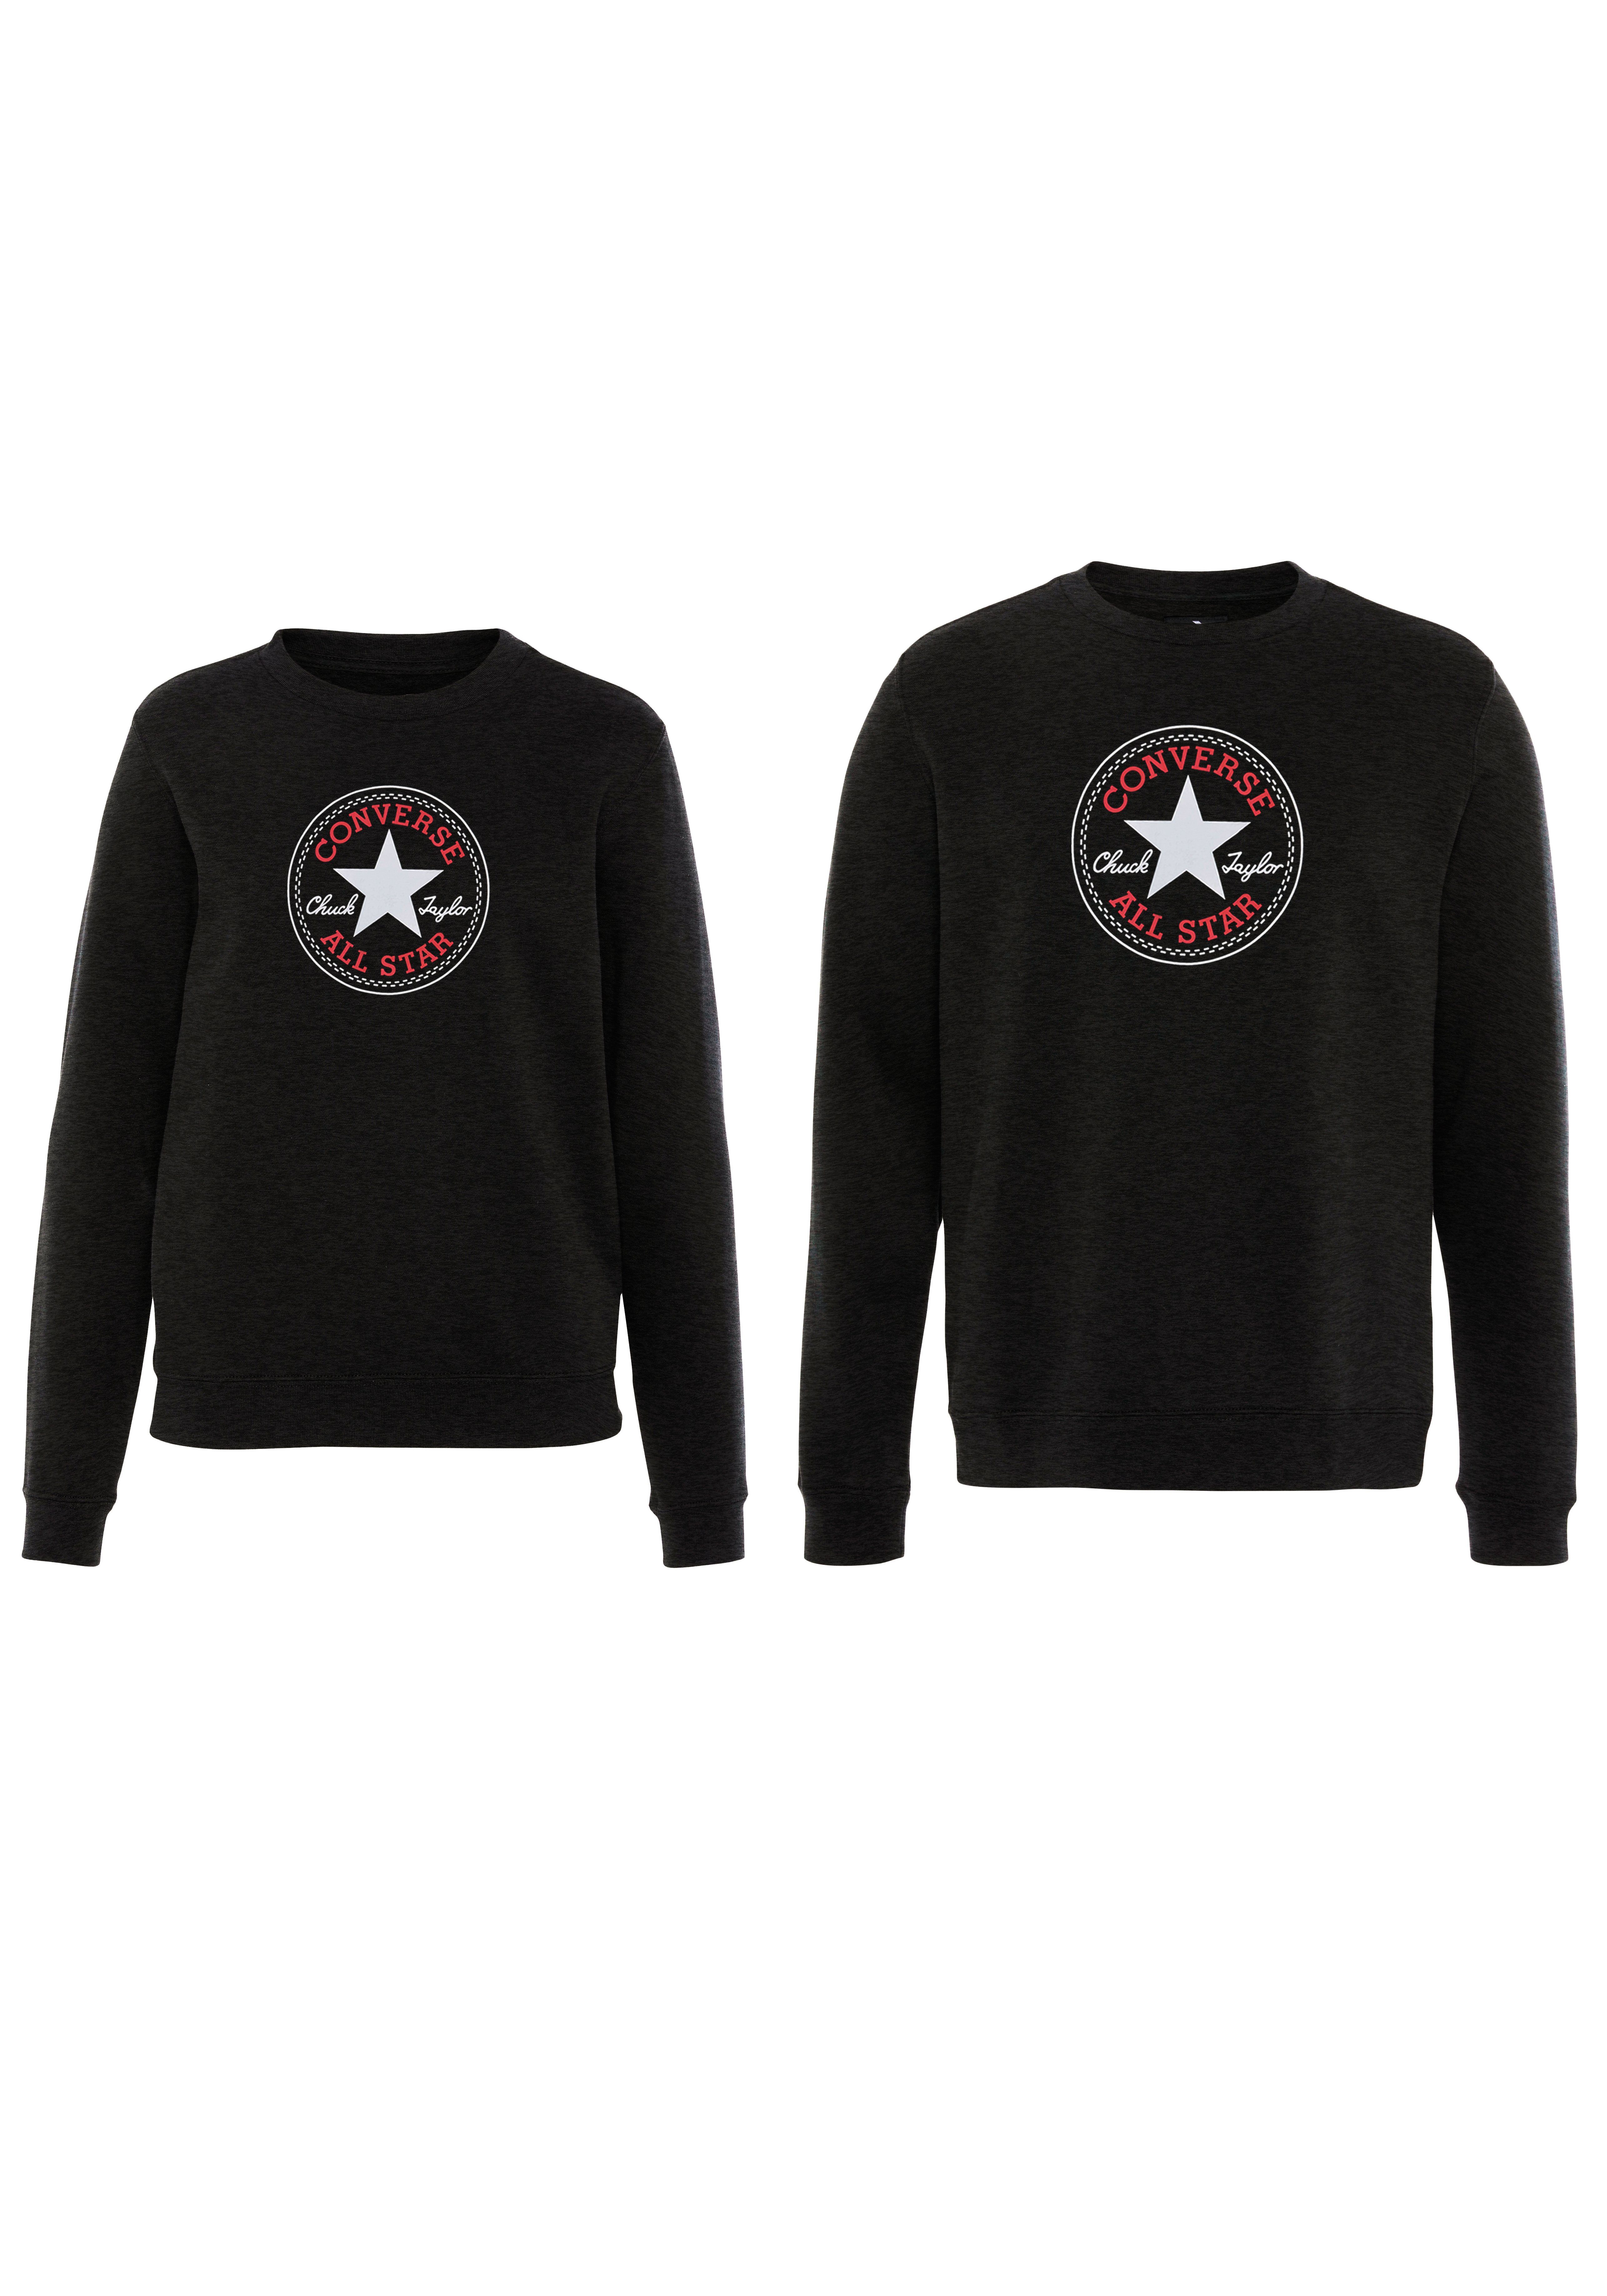 converse sweatshirt unisex all star patch brushed back zwart